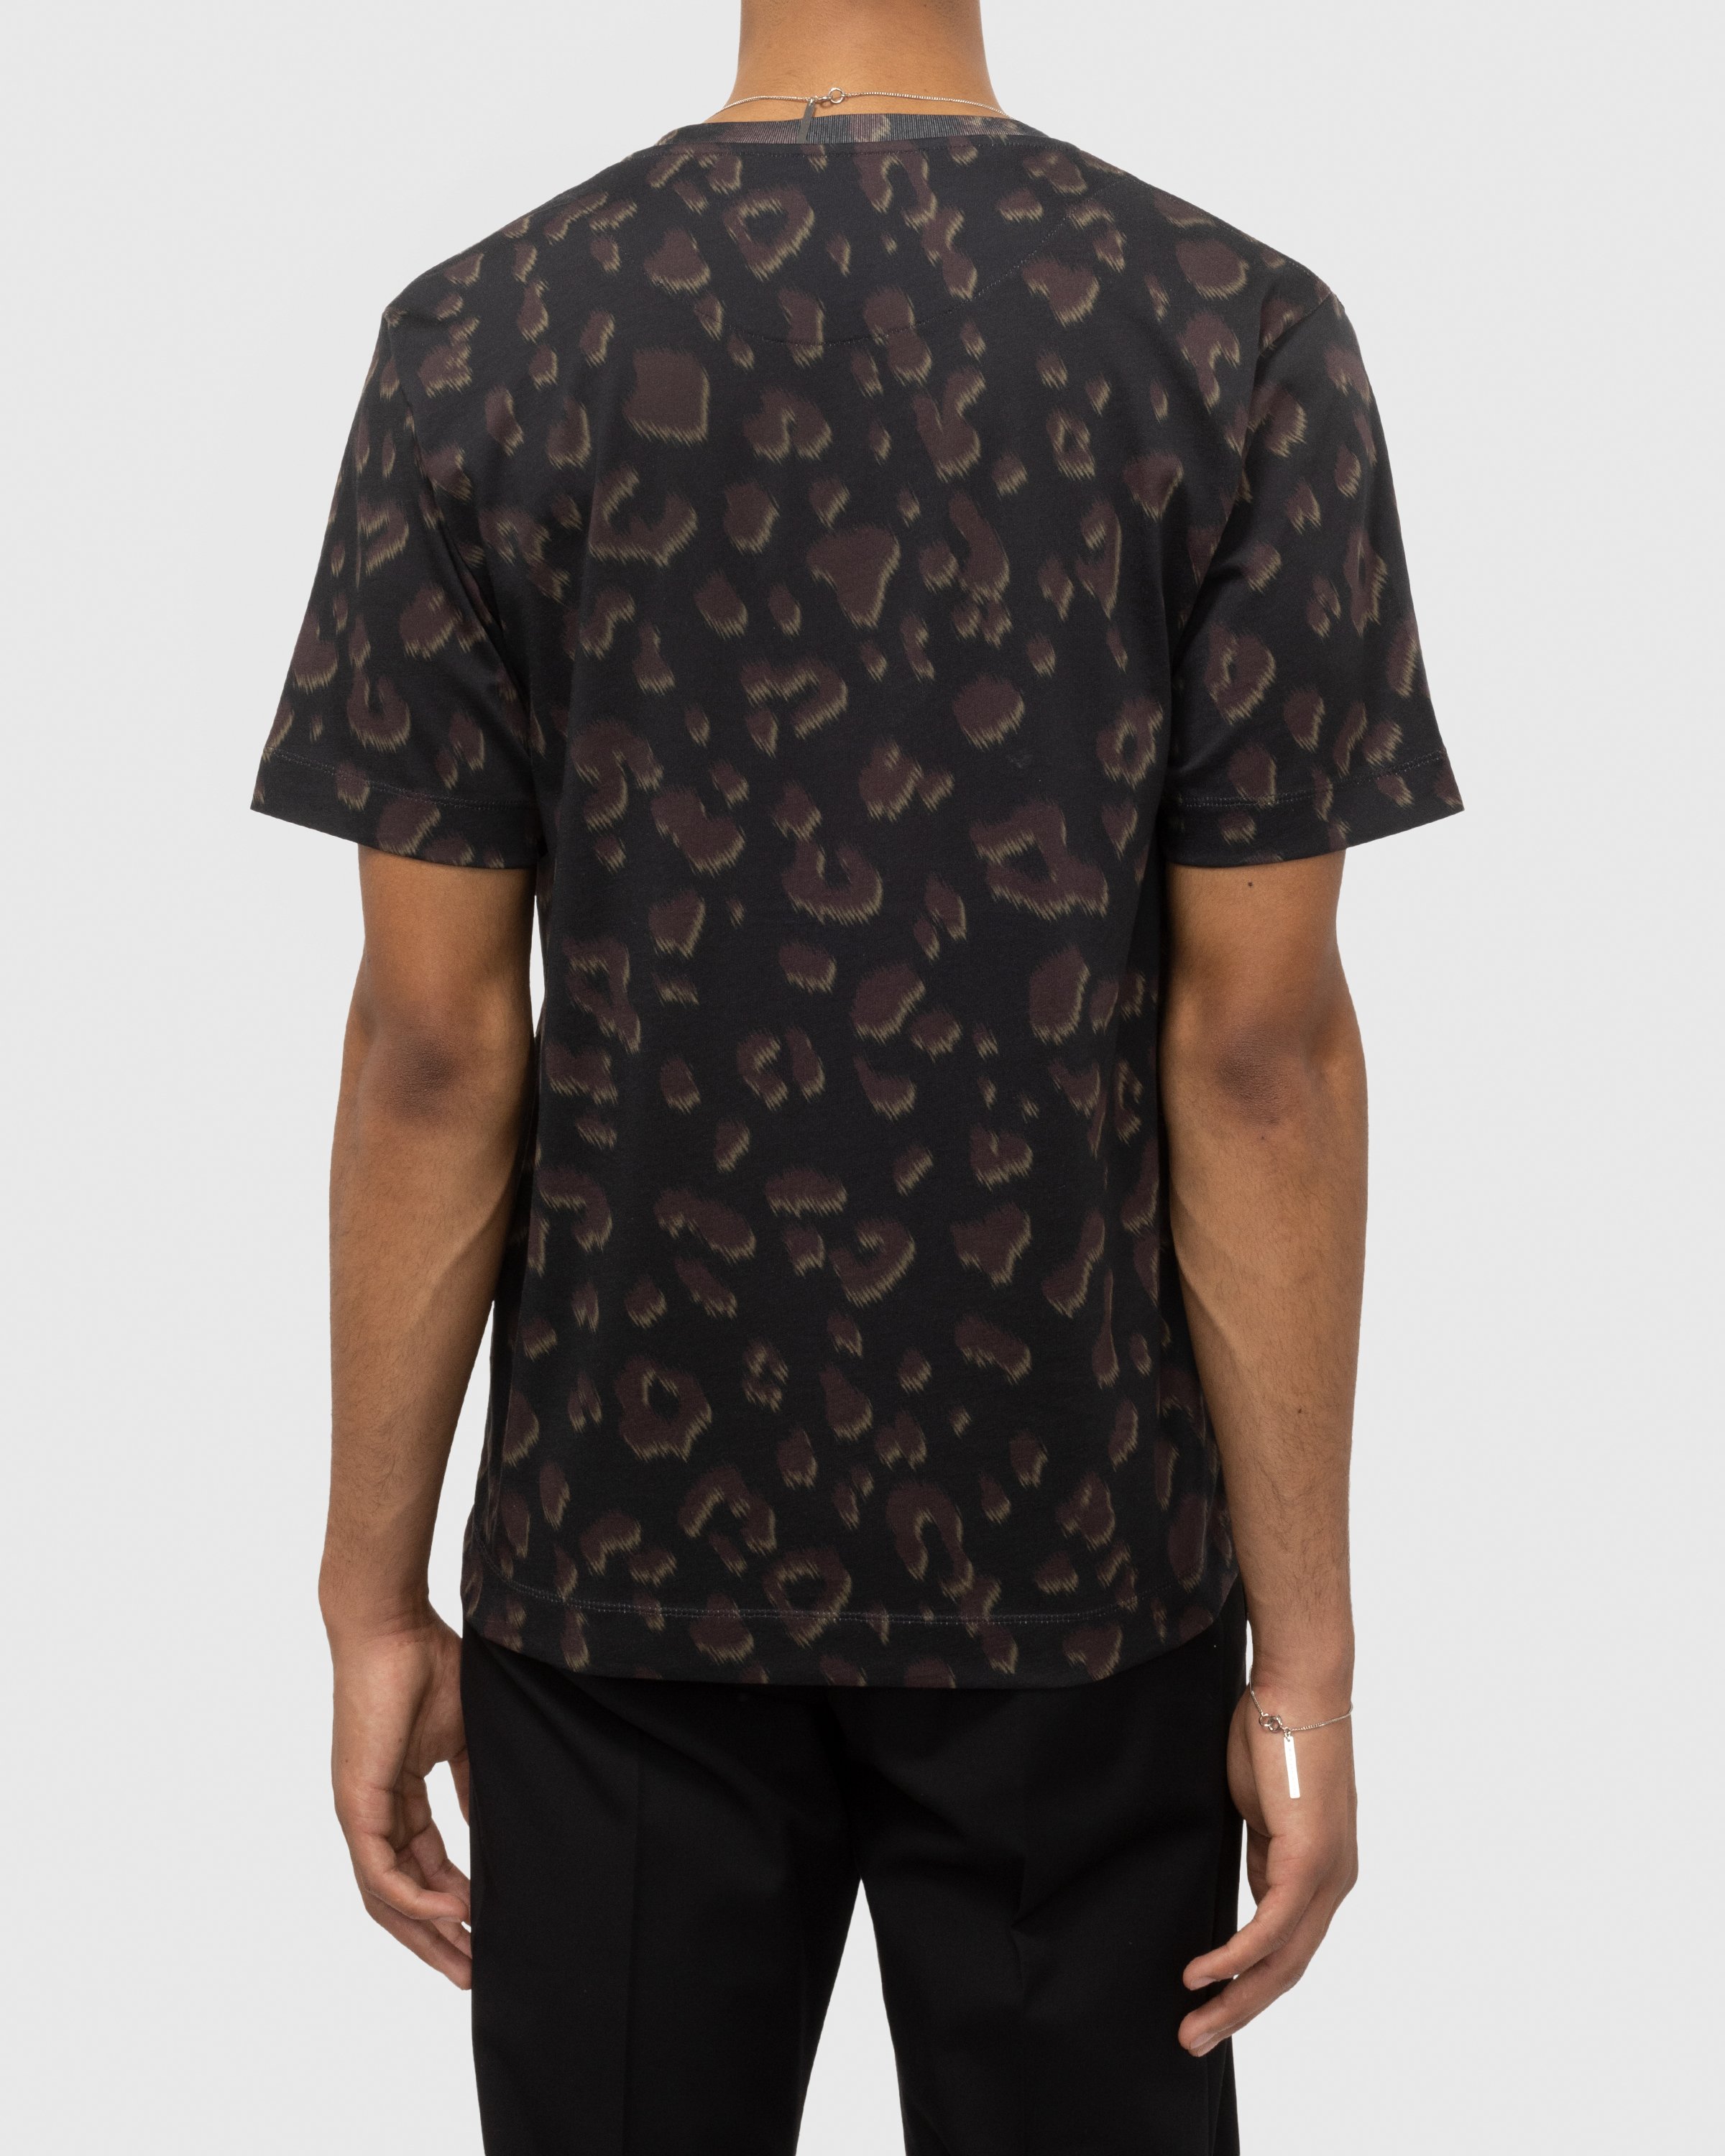 Dries van Noten - Hertz T-Shirt Black - Clothing - Black - Image 5